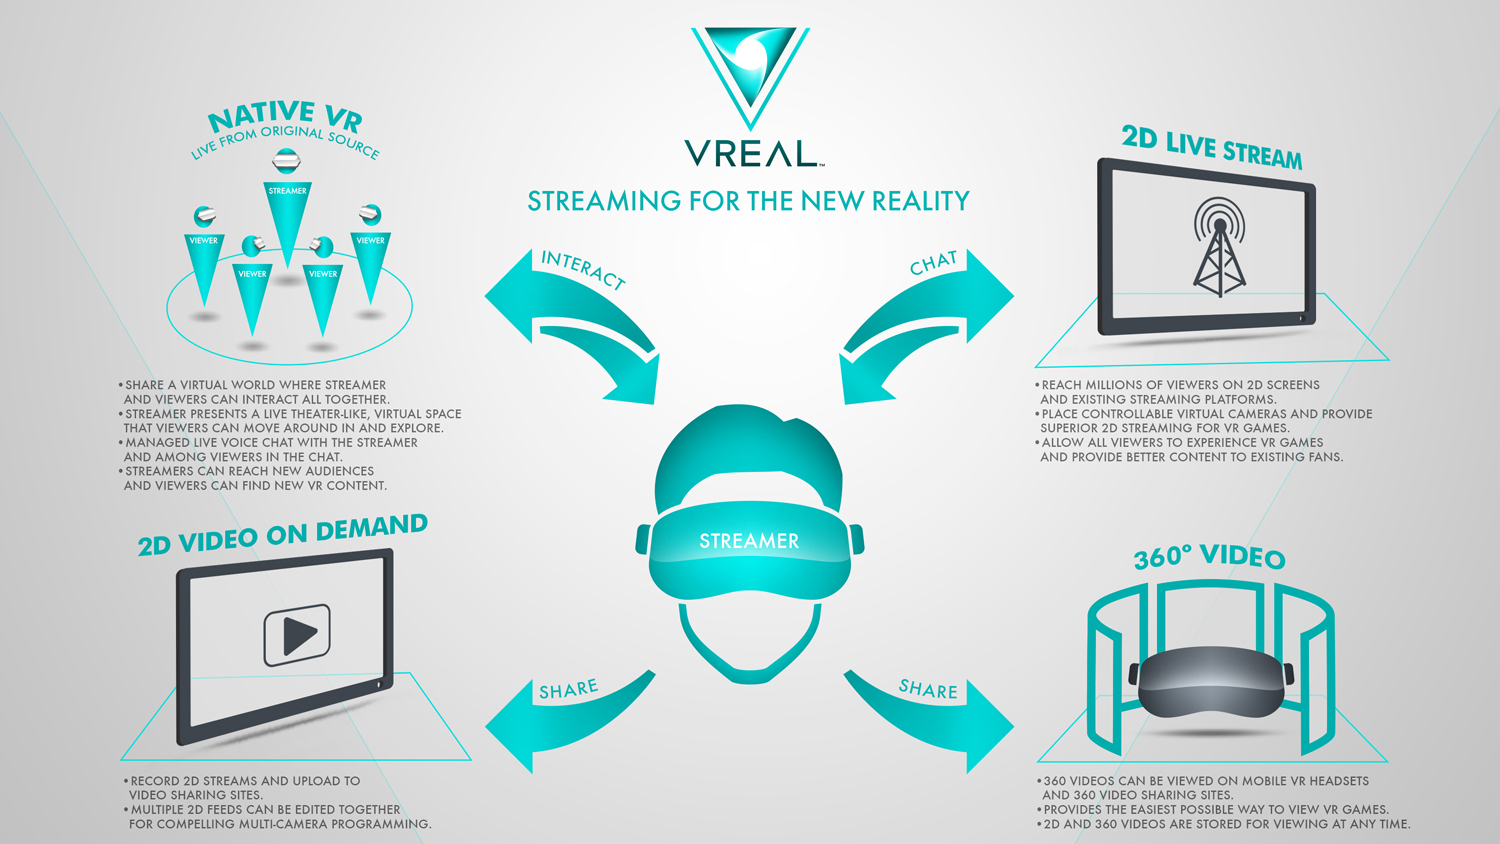 VReal's platform broken down in a handy infographic. 